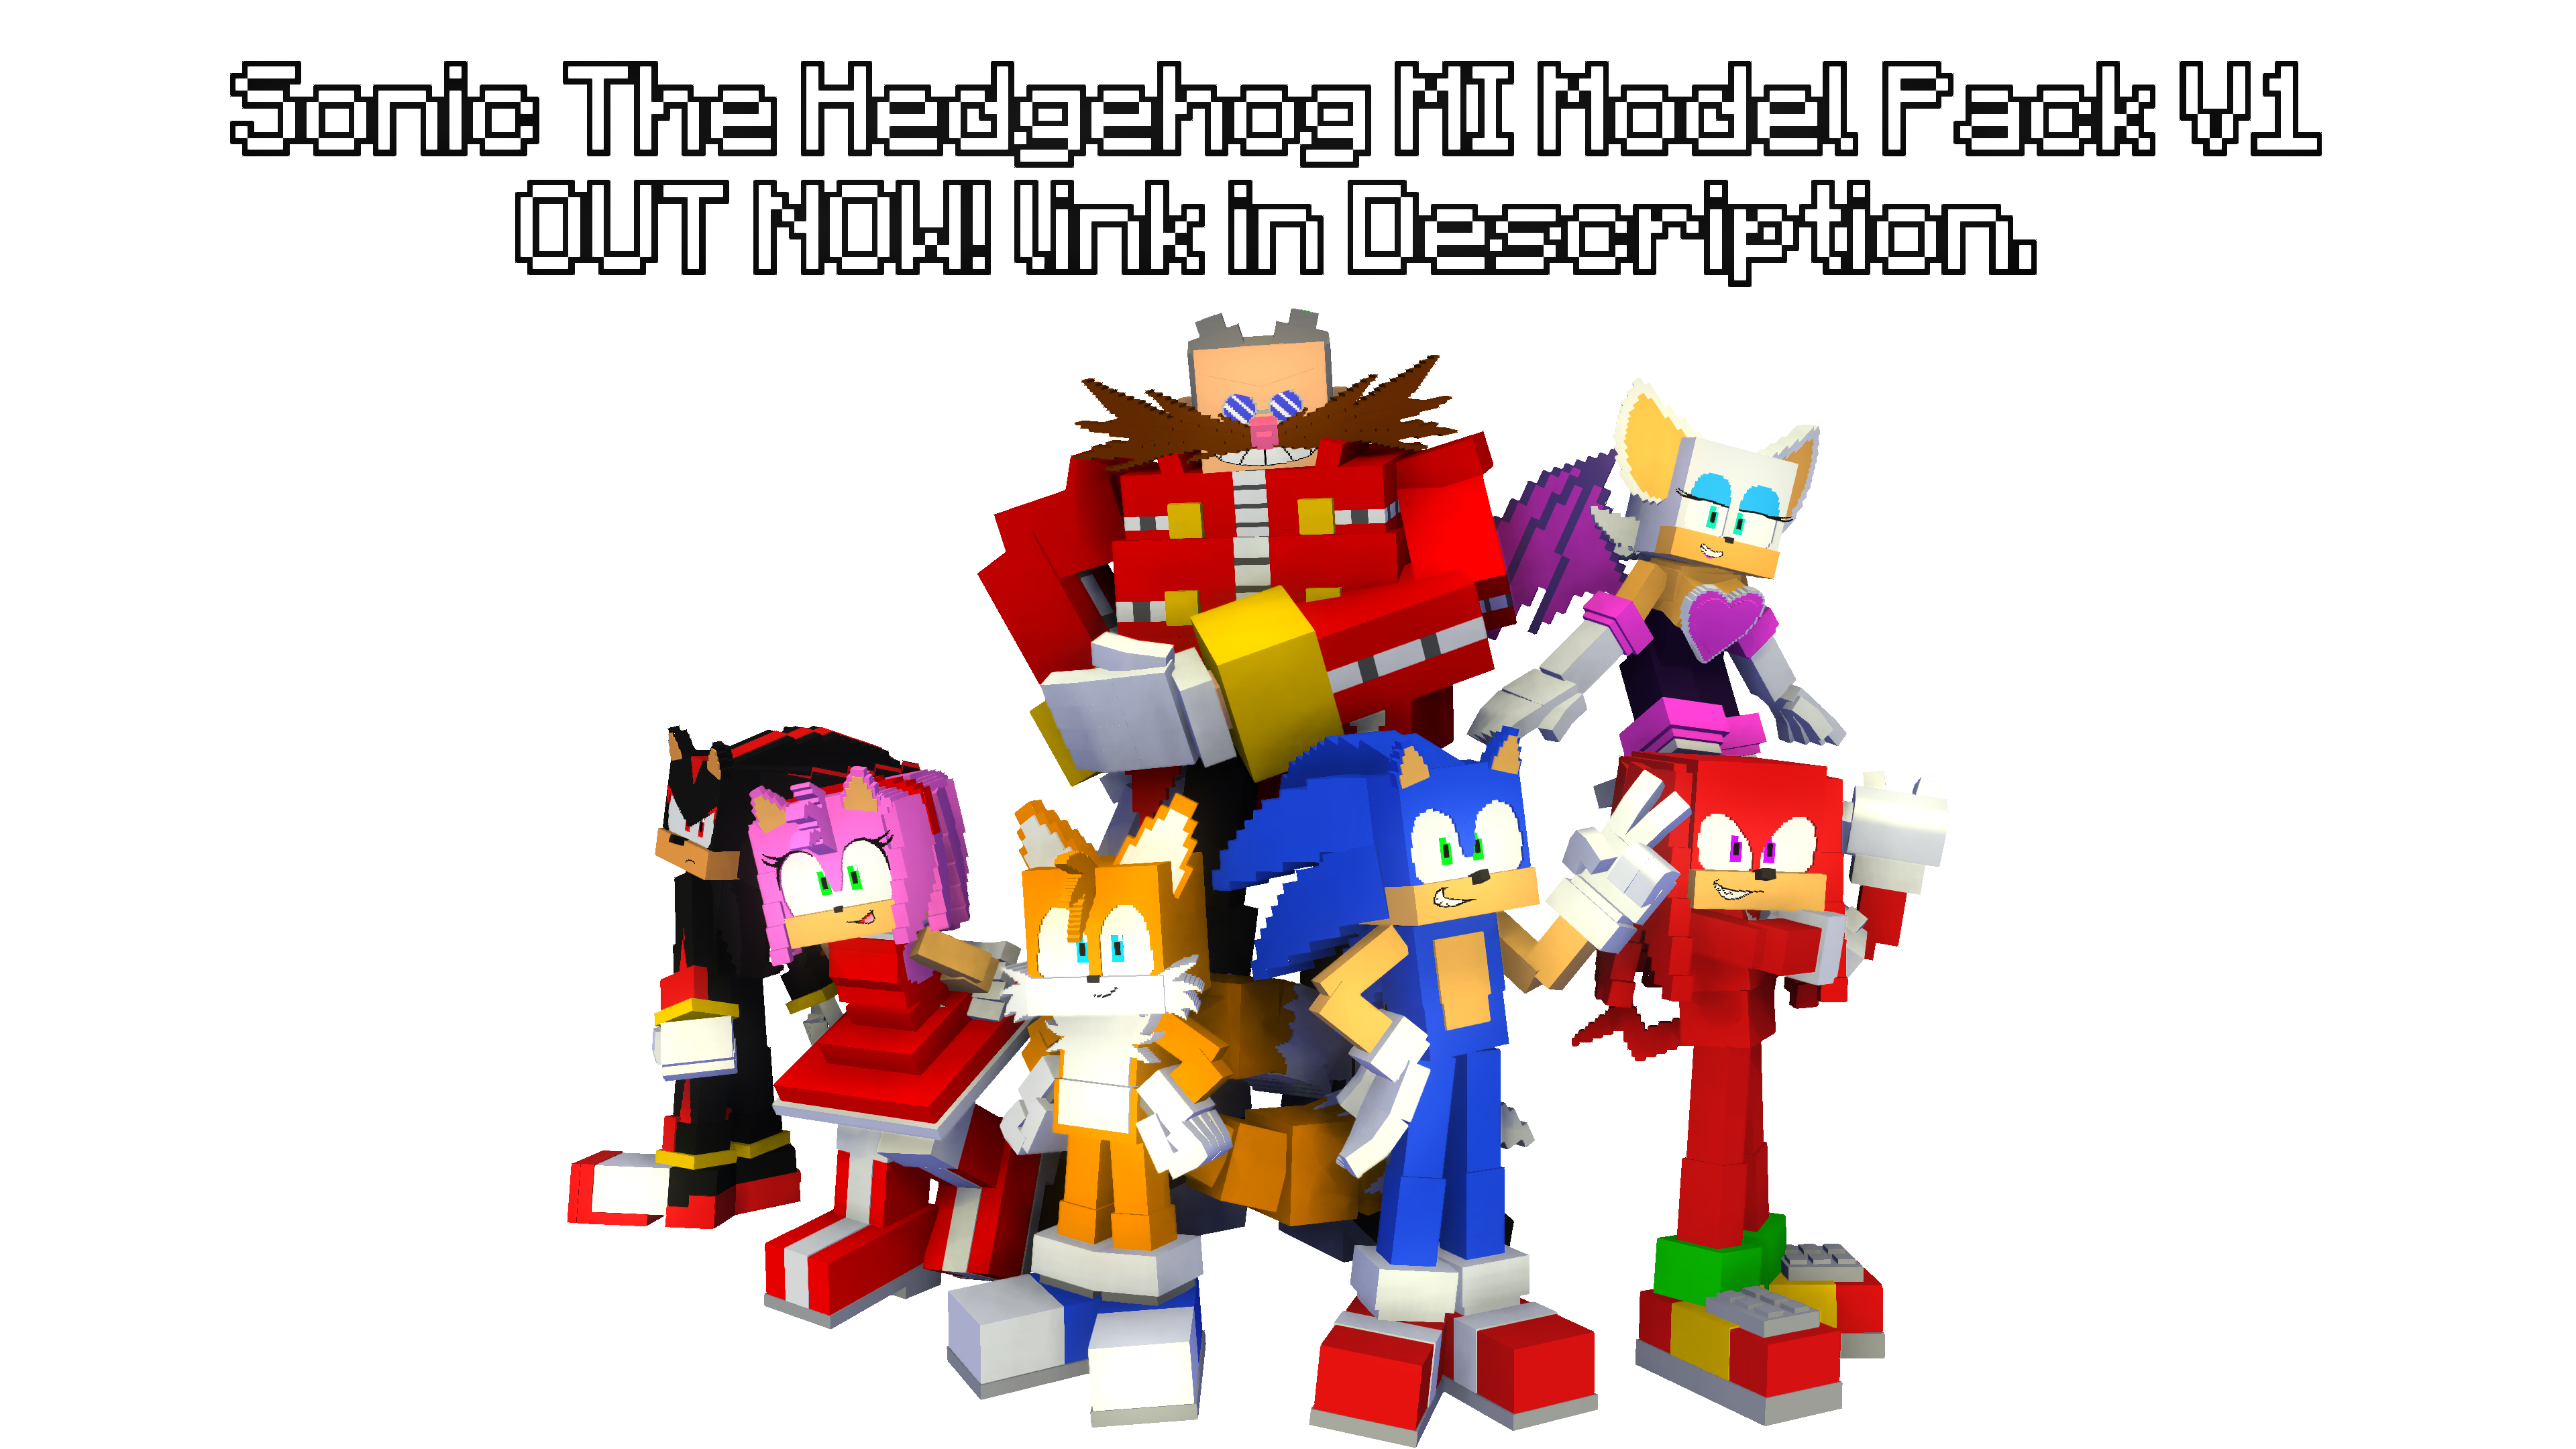 1.0.0 Demo] [Sprites] Sonic the Hedgehog - Rigs - Mine-imator forums